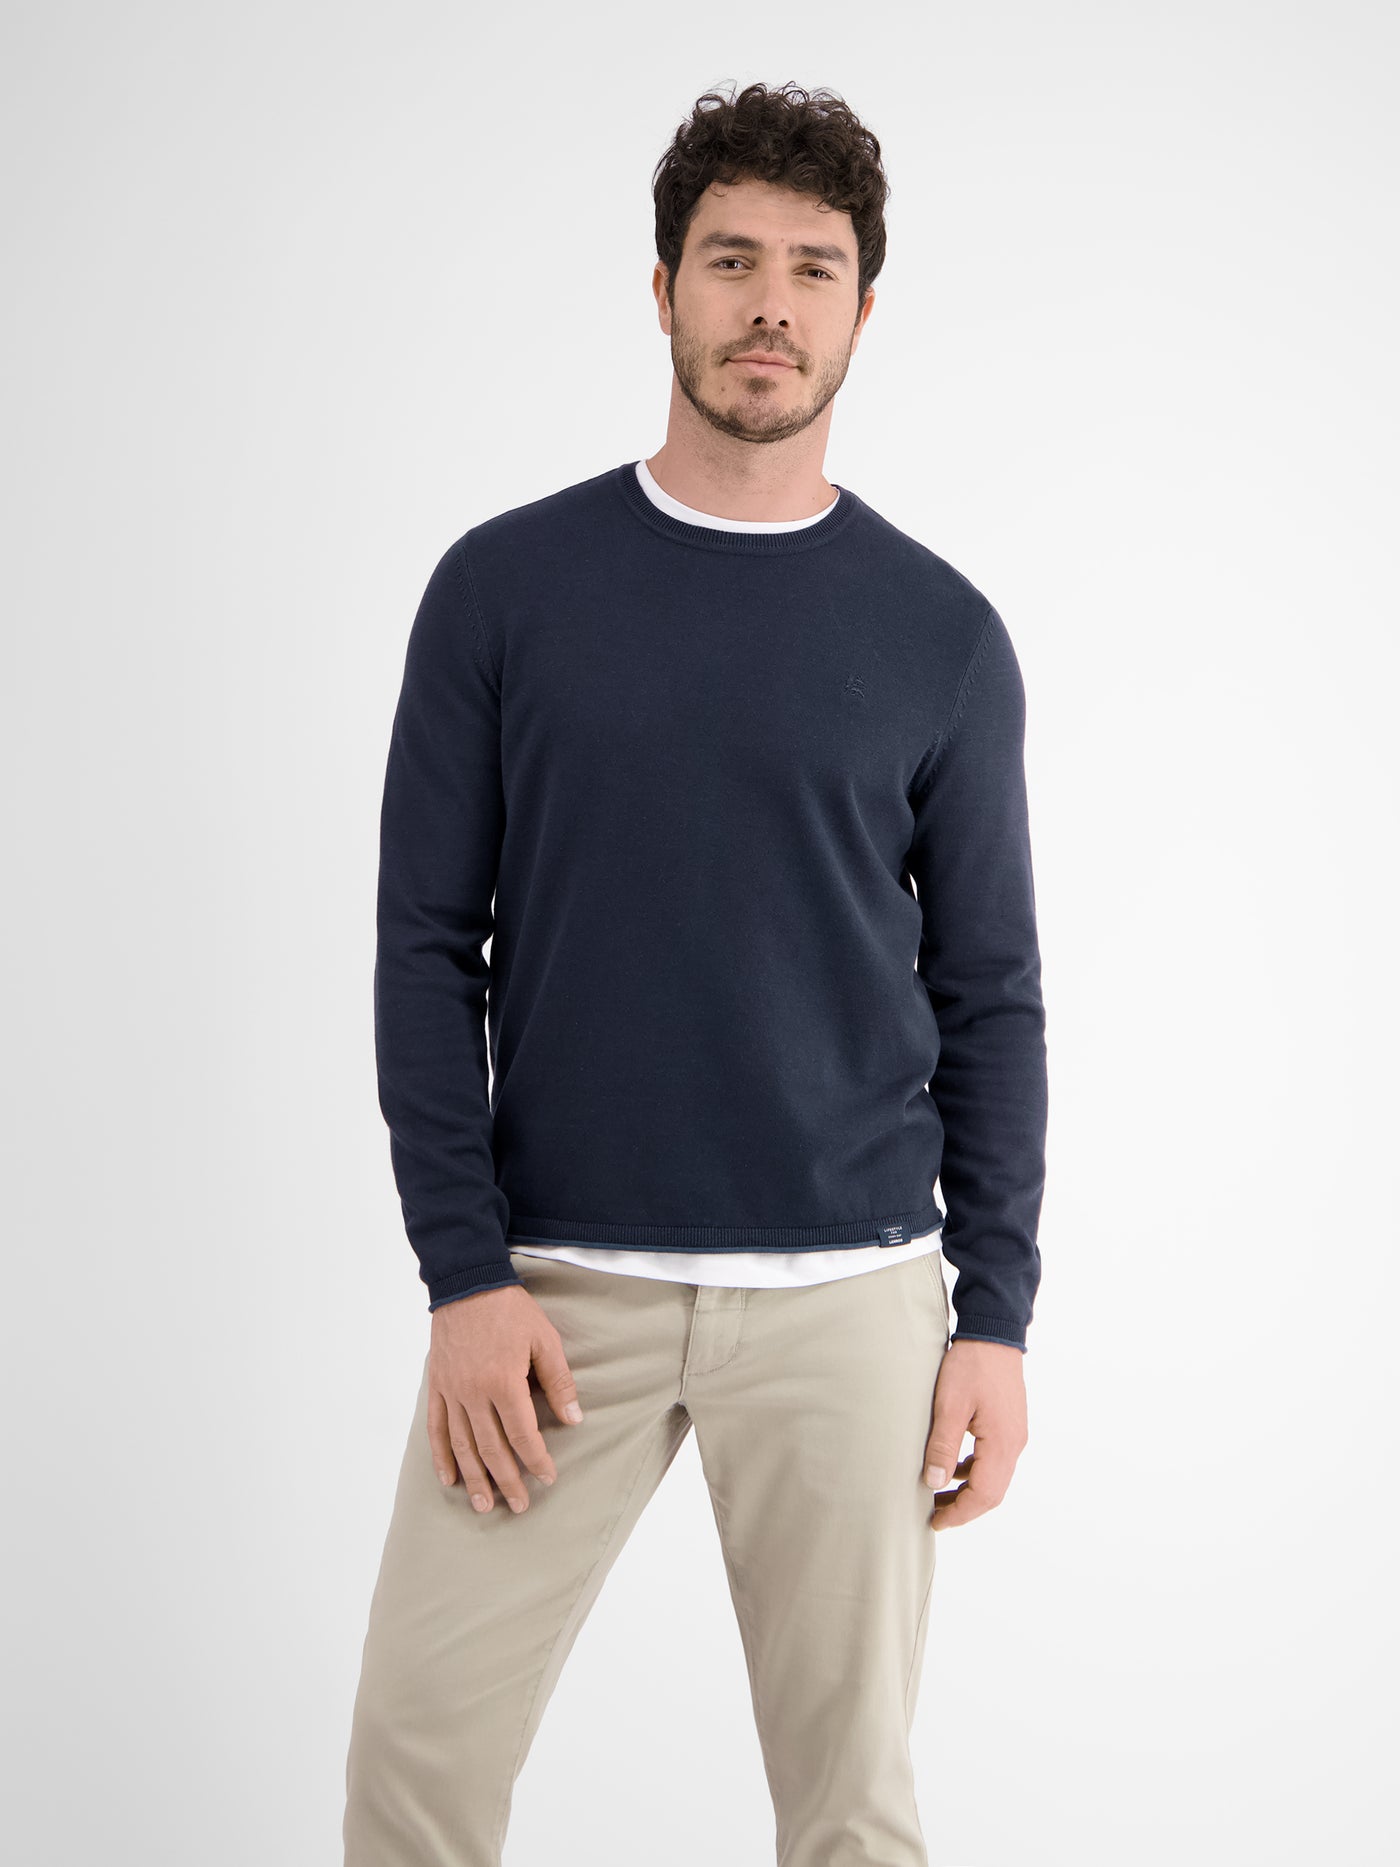 Round neck sweater flat knit